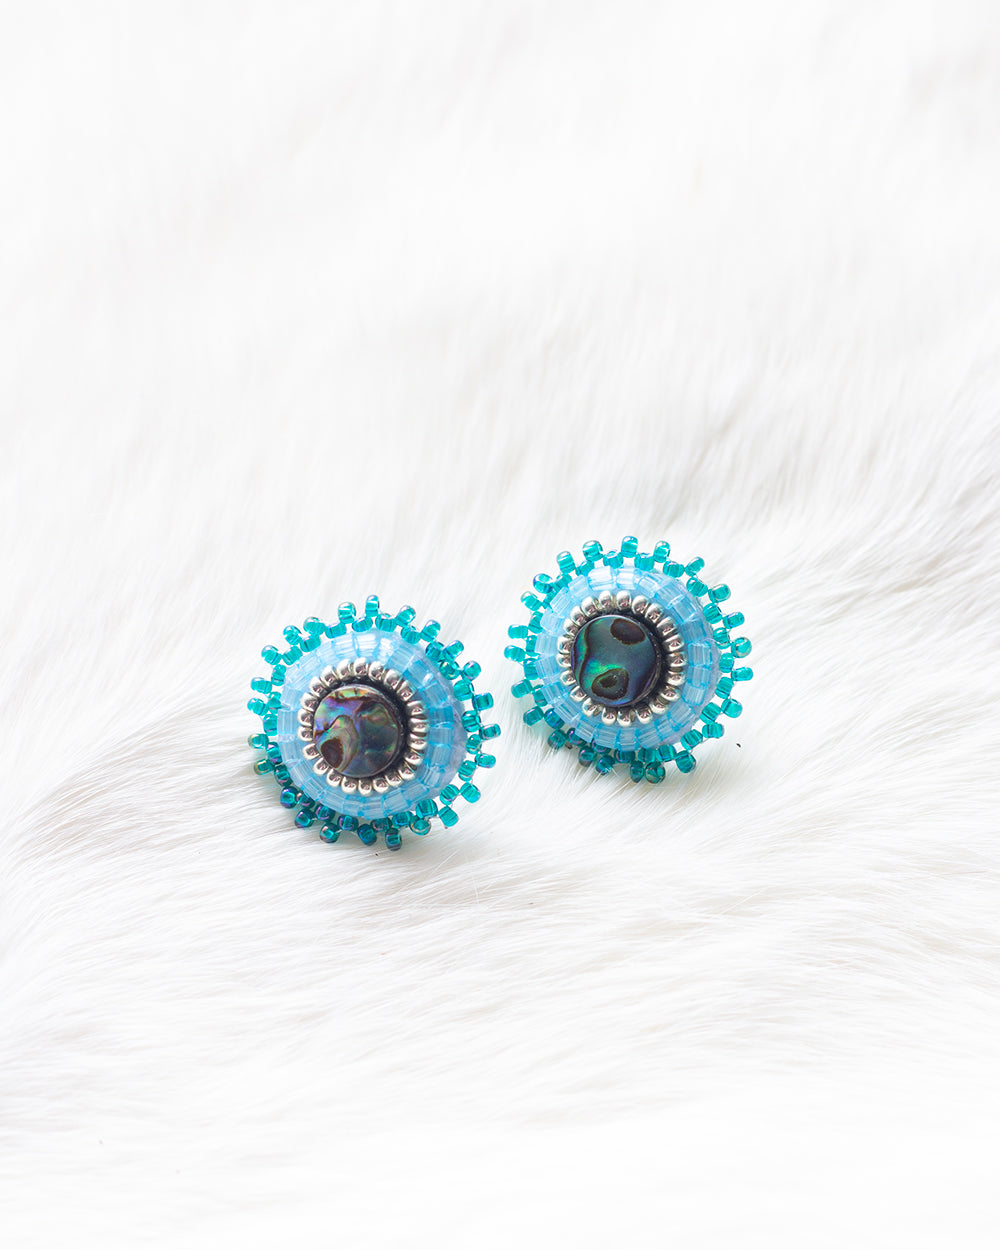 Blue Abalone Stud Earrings